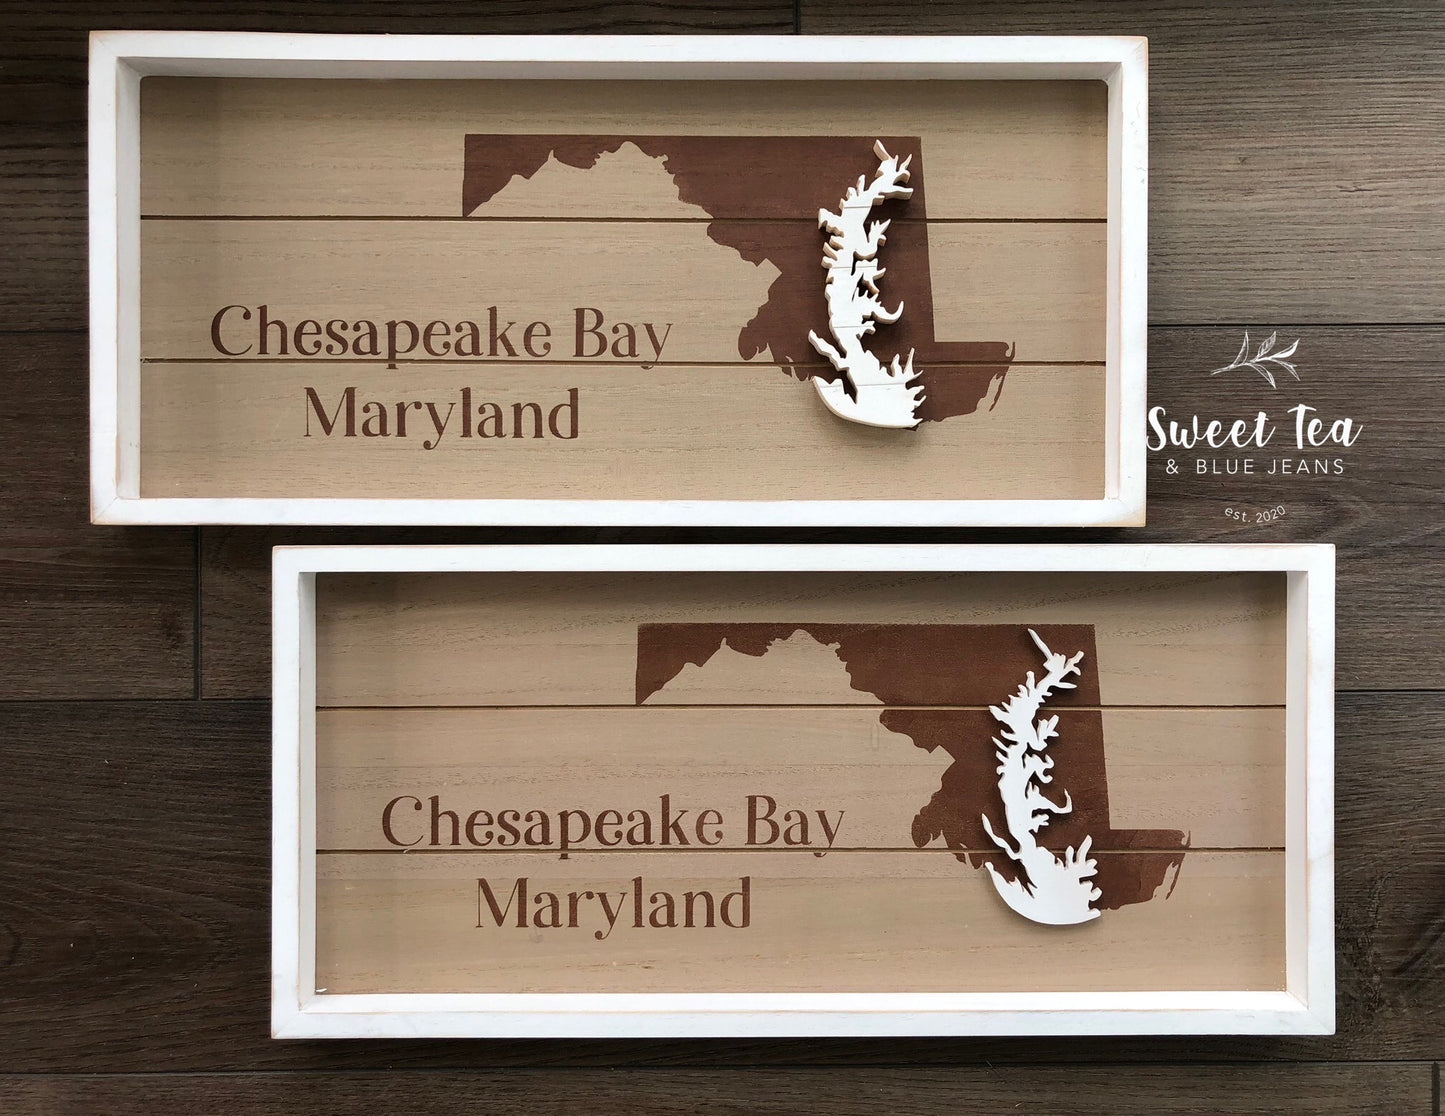 Hand-scrolled Chesapeake Bay sign